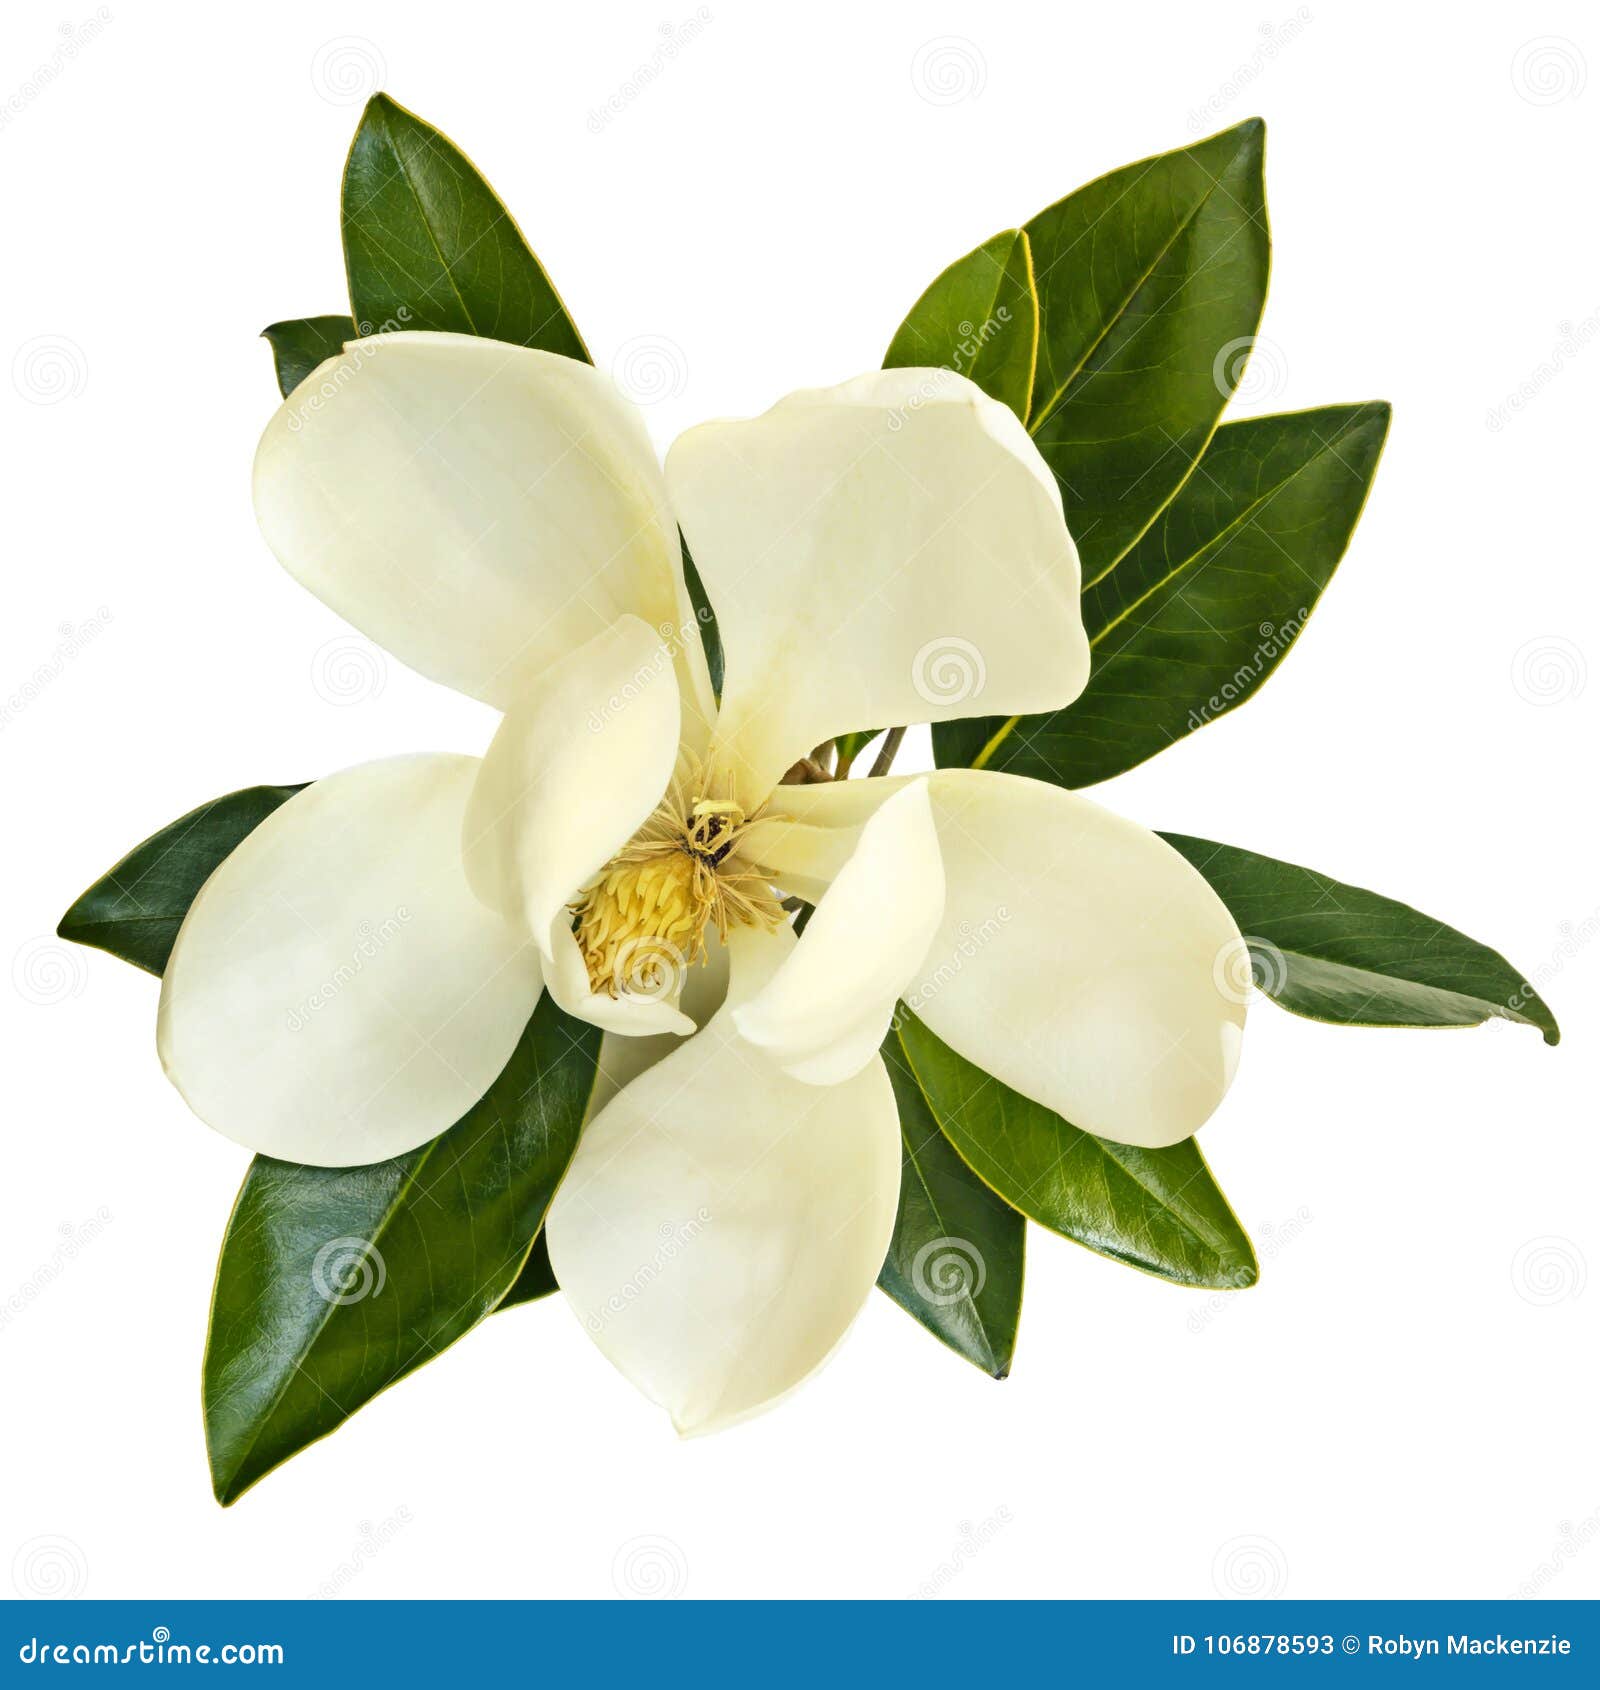 magnolia flower top view  on white